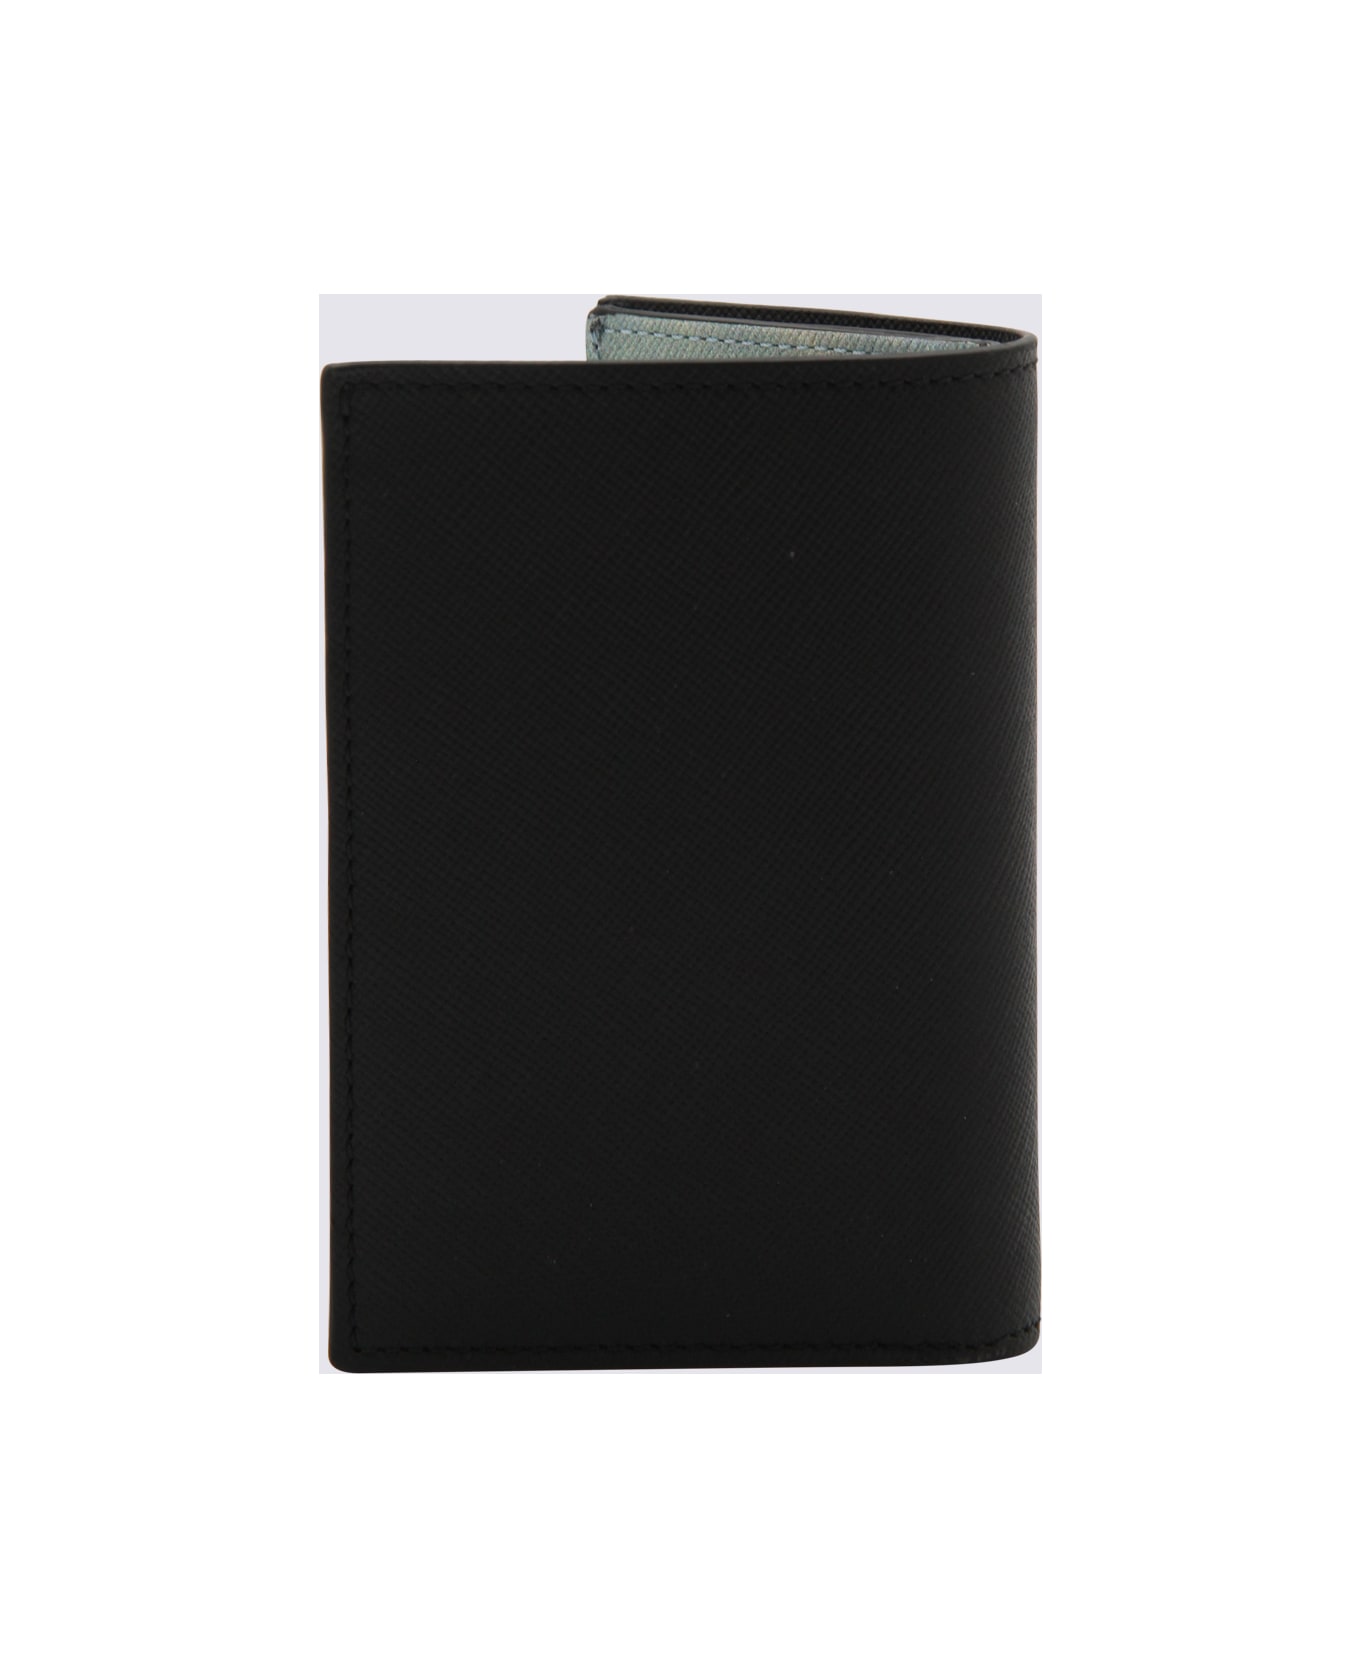 Paul Smith Black Multicolour Leather Cardholder - Nero 財布